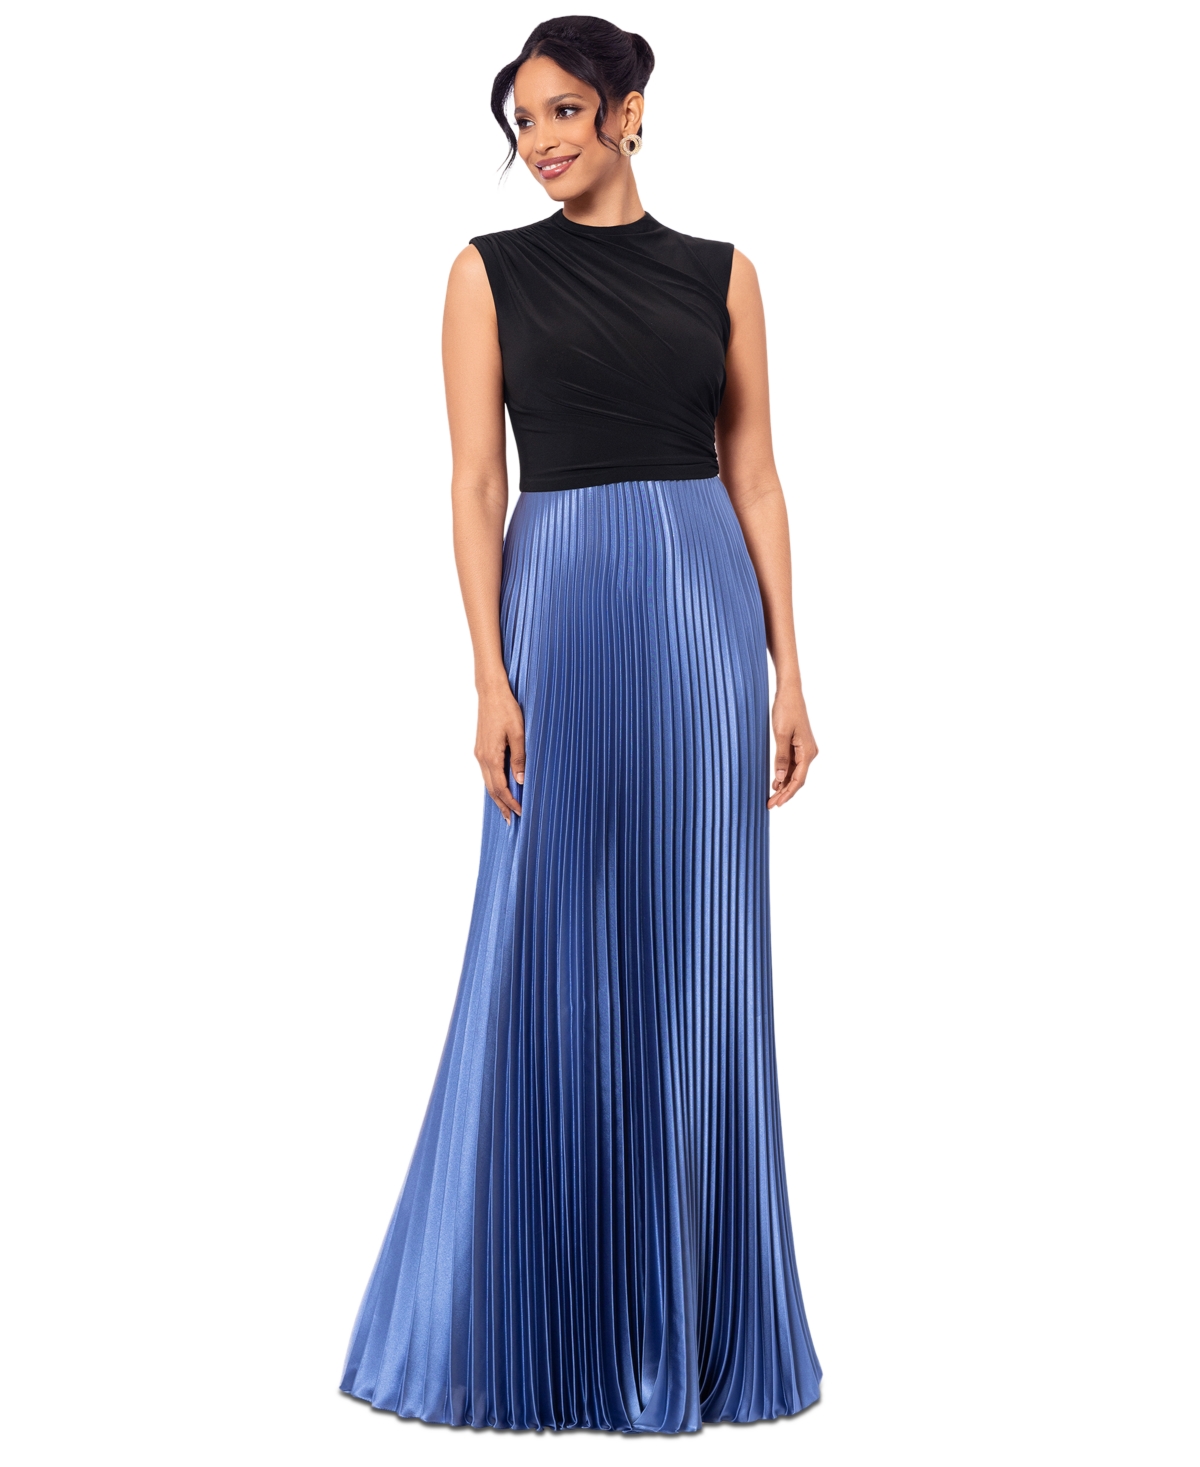 Women's Pleated-Skirt High-Neck Maxi Dress - Black/Blue